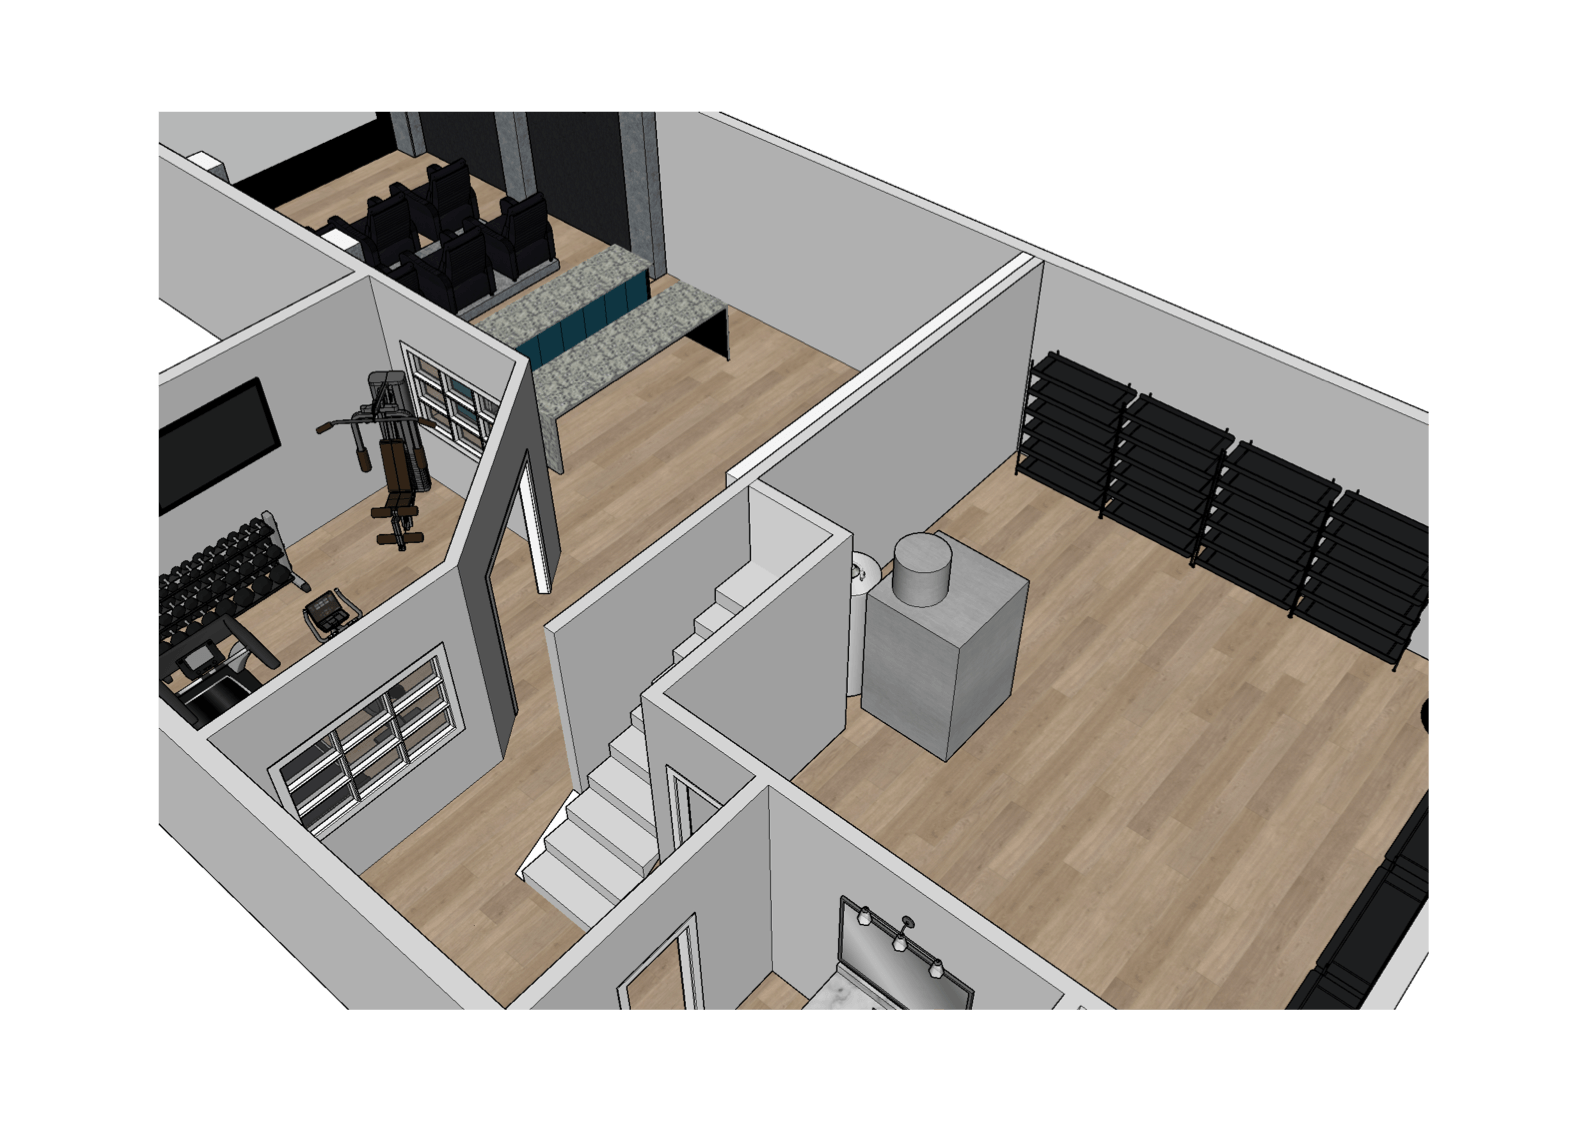 a 3d floor plan of a house basement with wooden floors